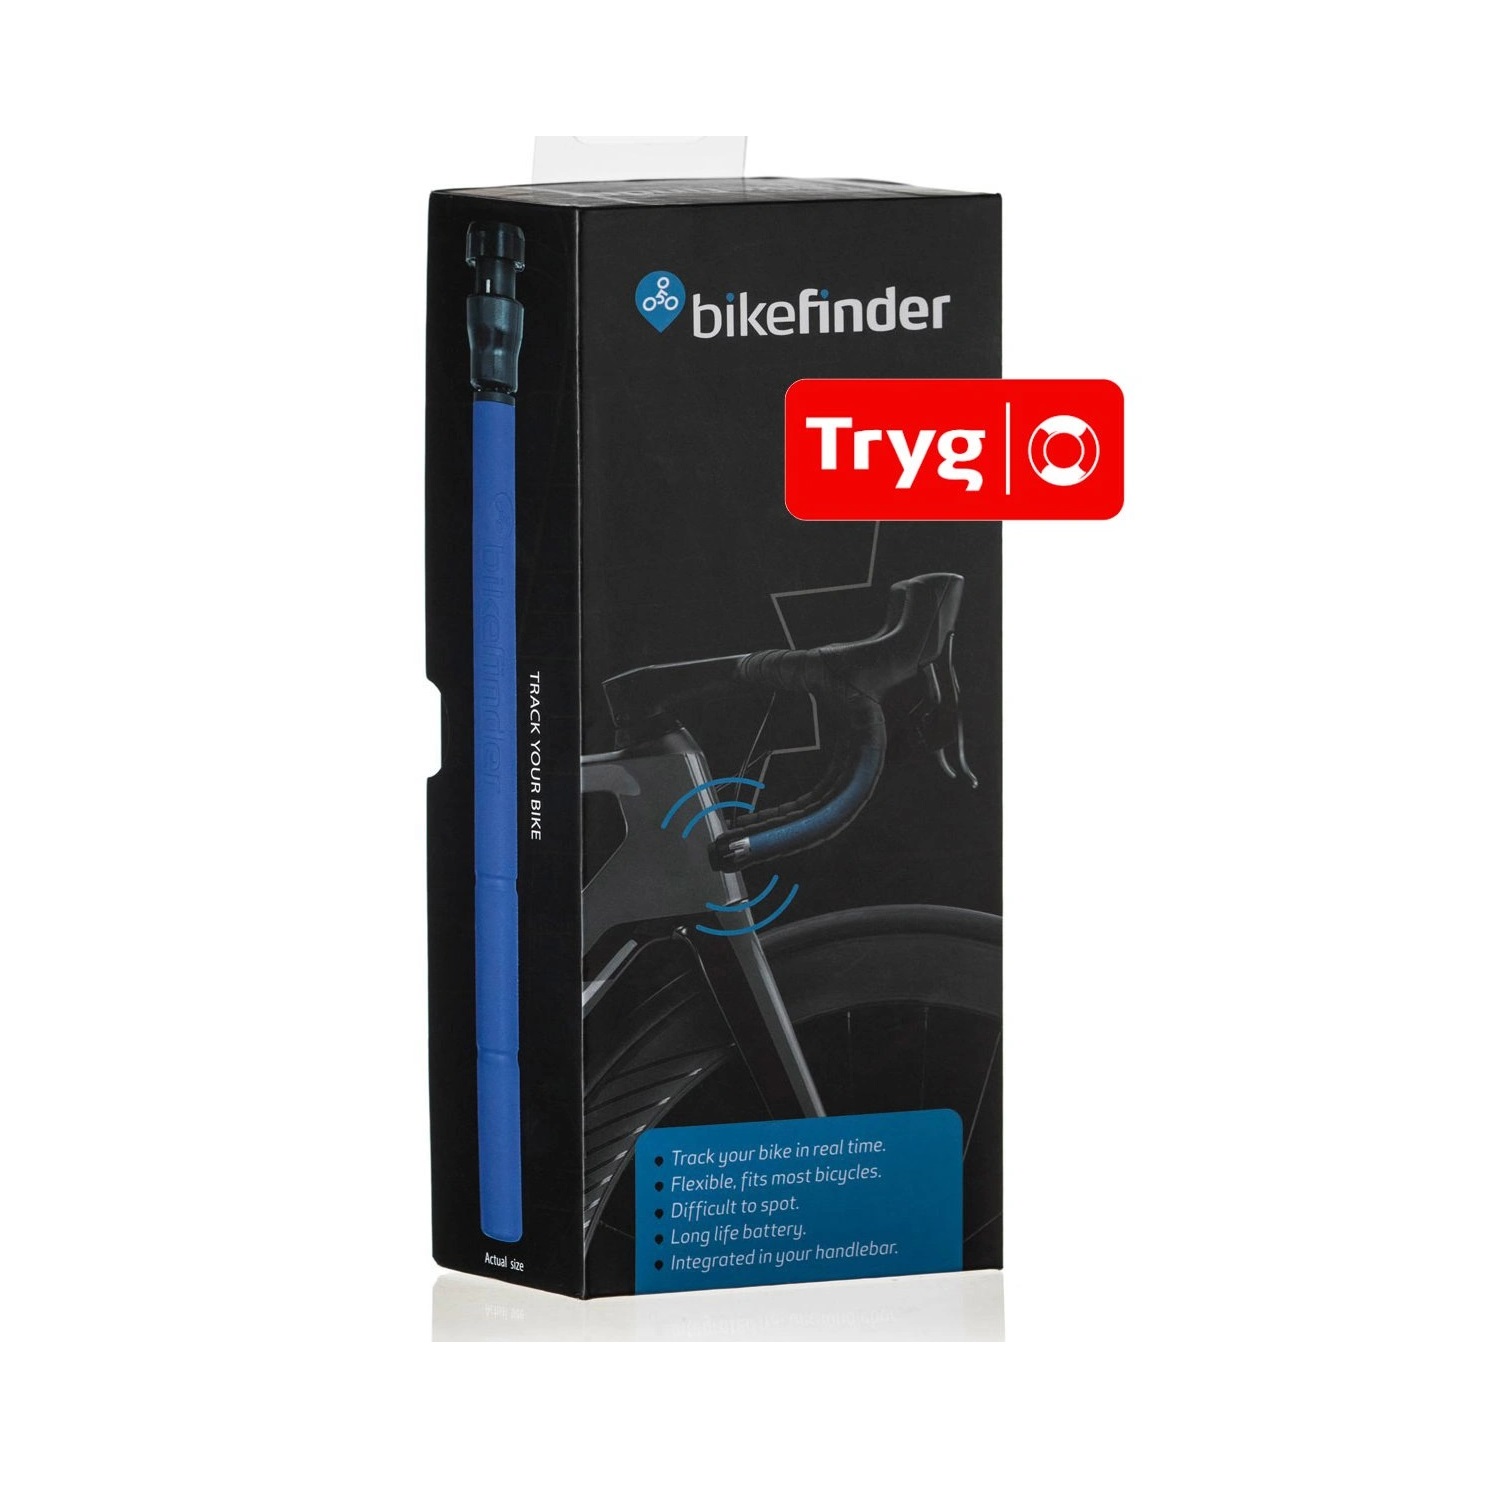 Bikefinder Cykelalarm og GPS-tracker +kr. 1.099,00